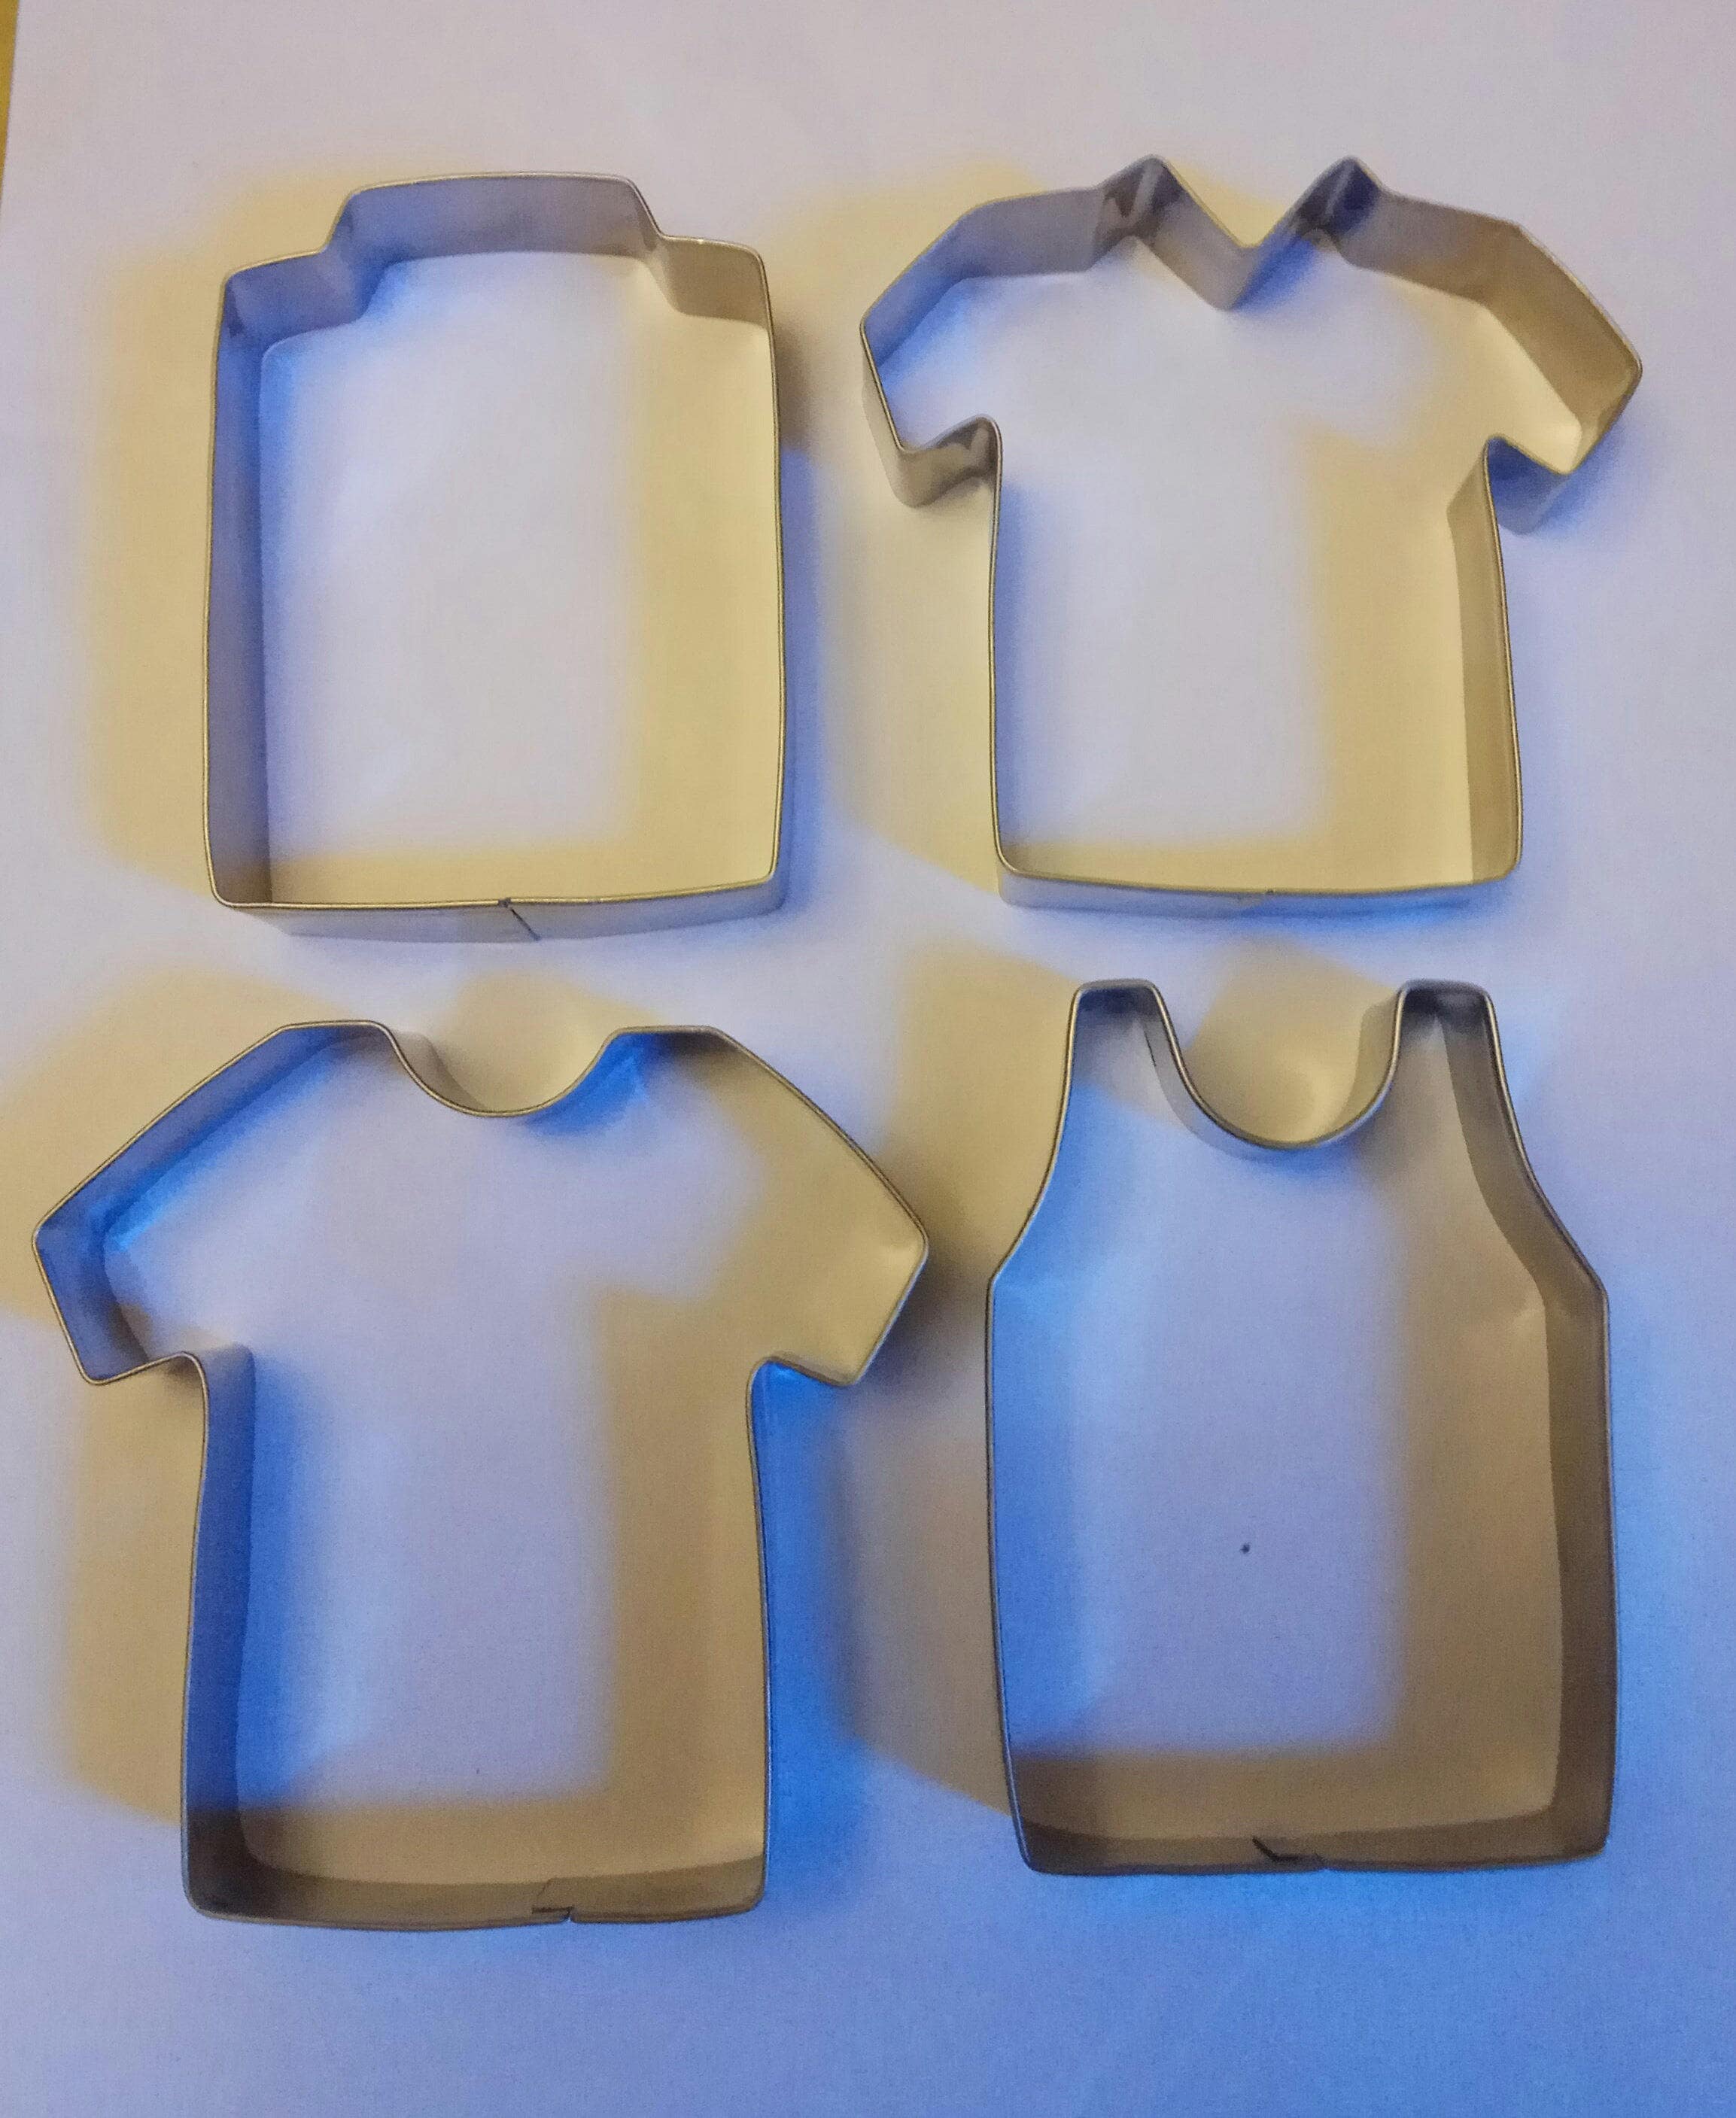 2 Mini T-Shirt Metal Cookie Cutter